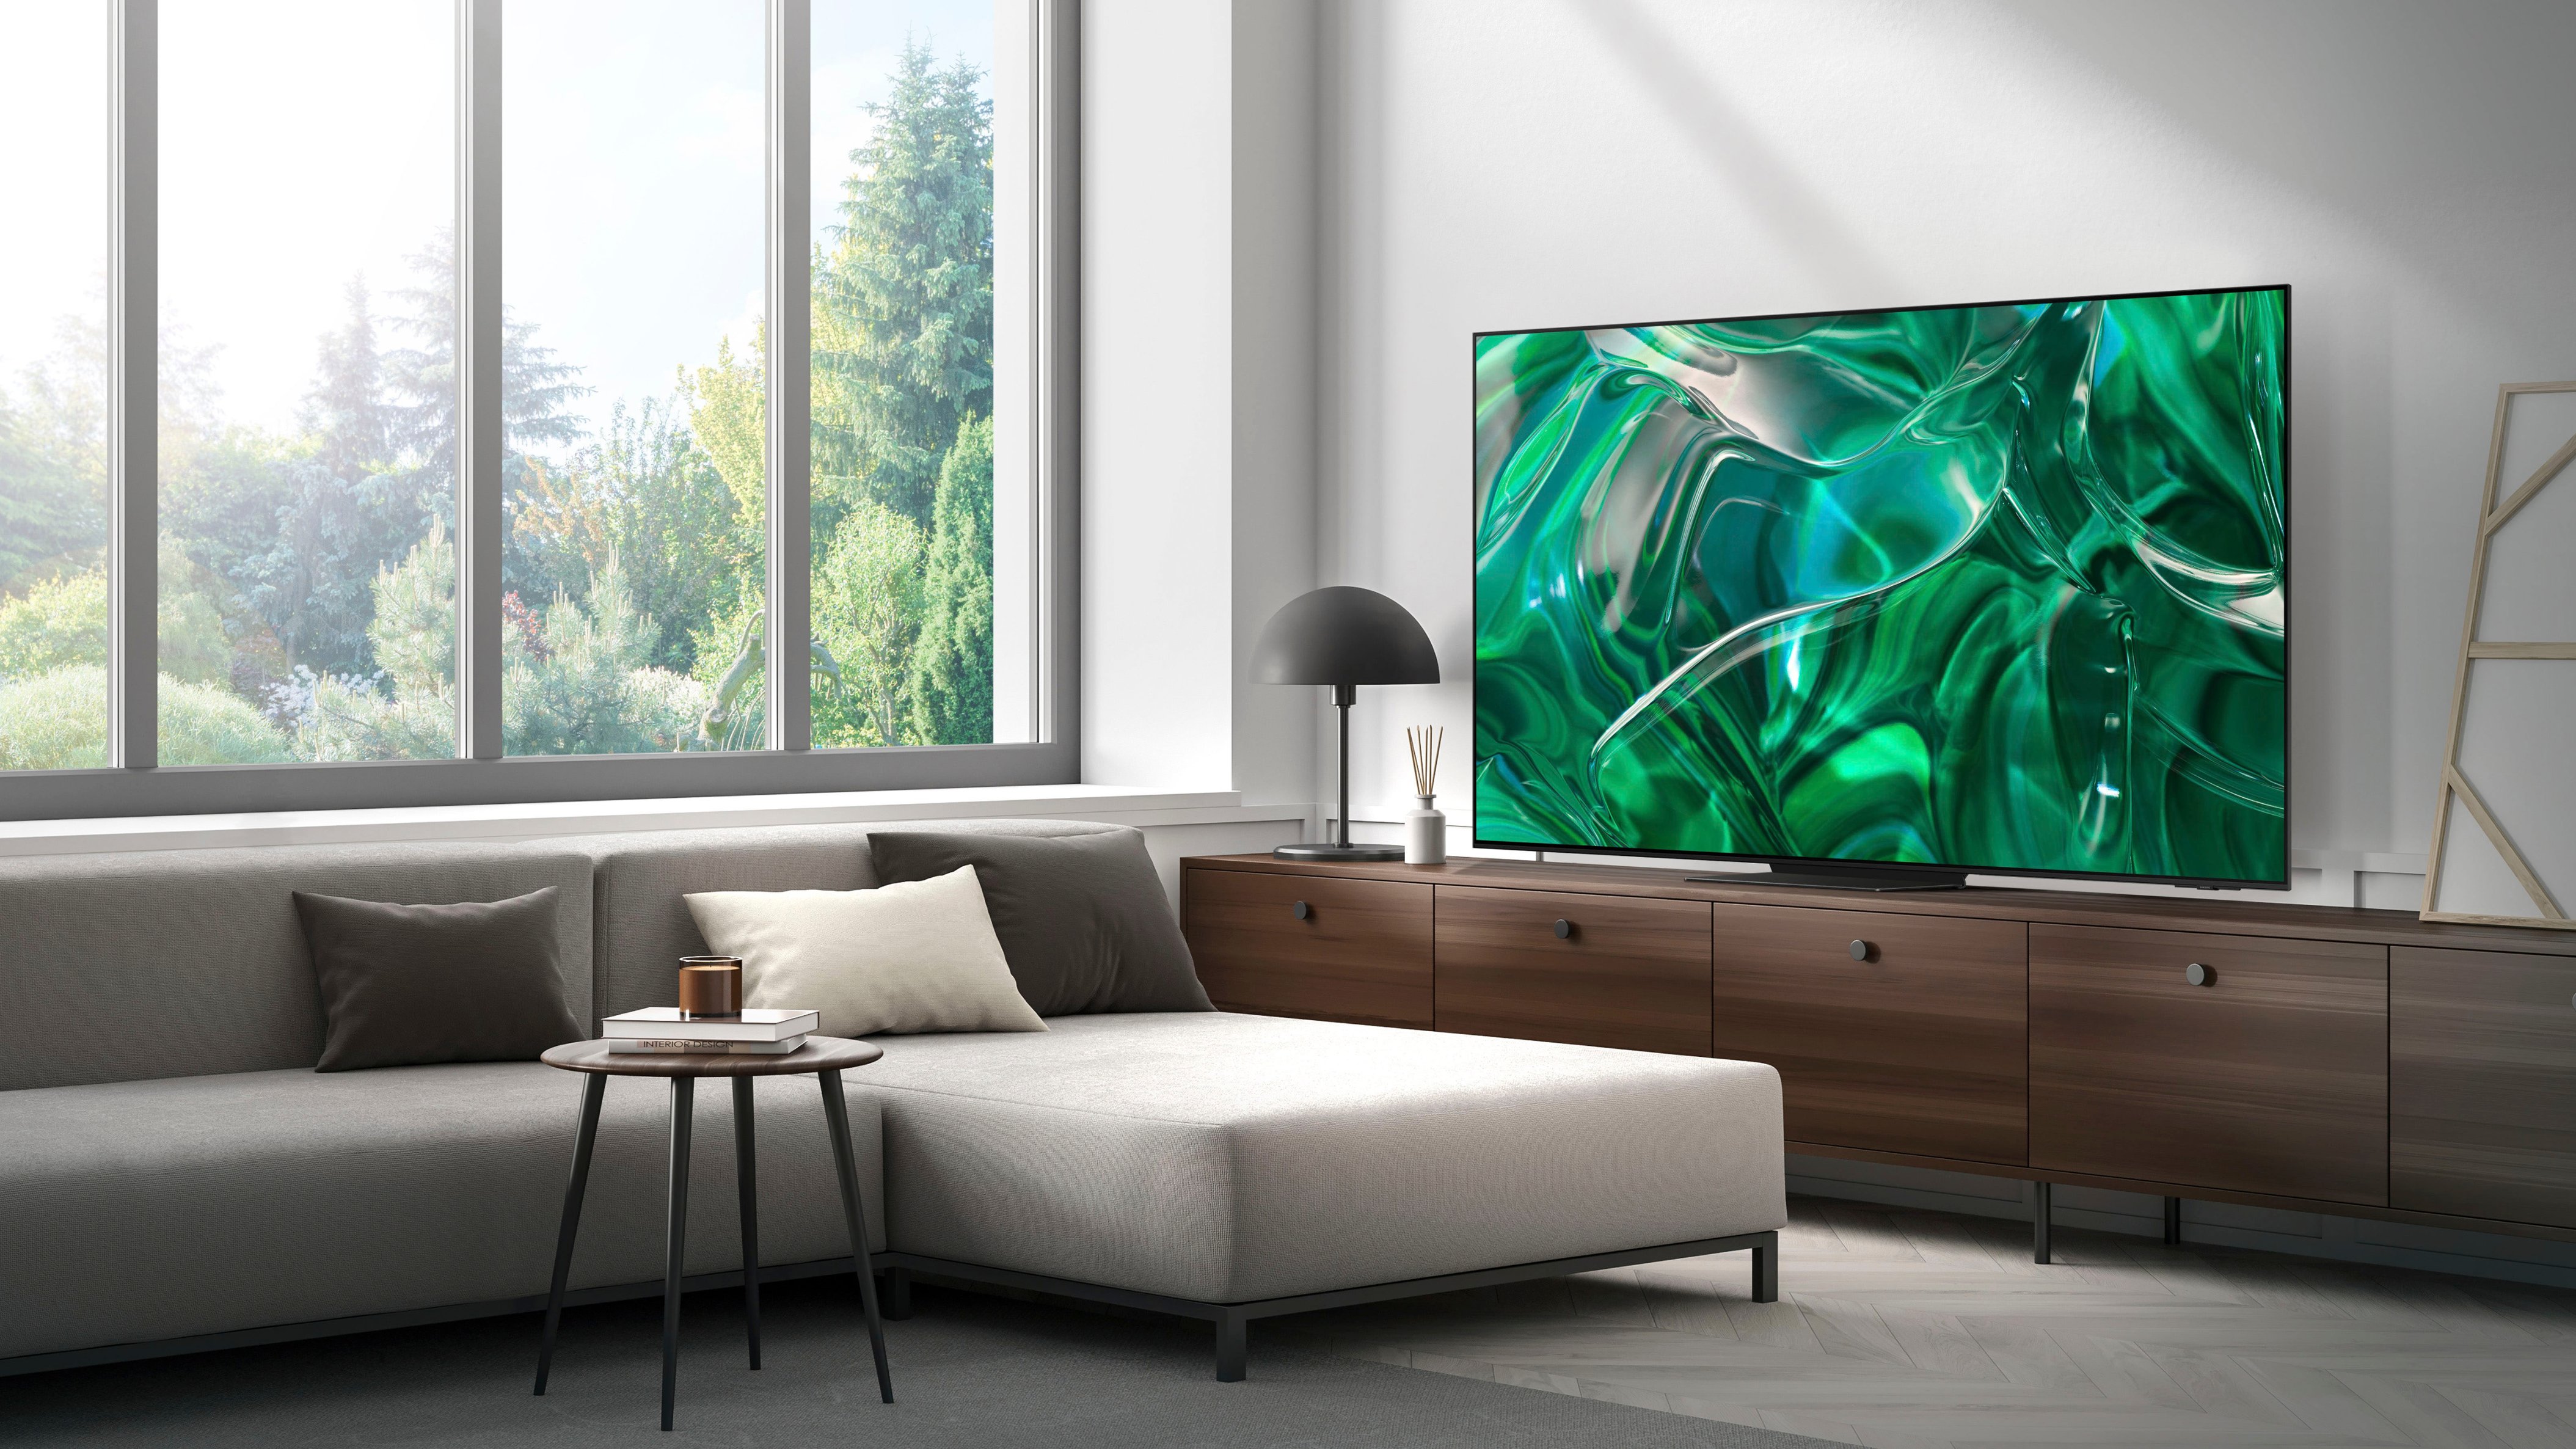 Samsung - 55 Class S95C Series OLED 4K UHD Smart Tizen TV